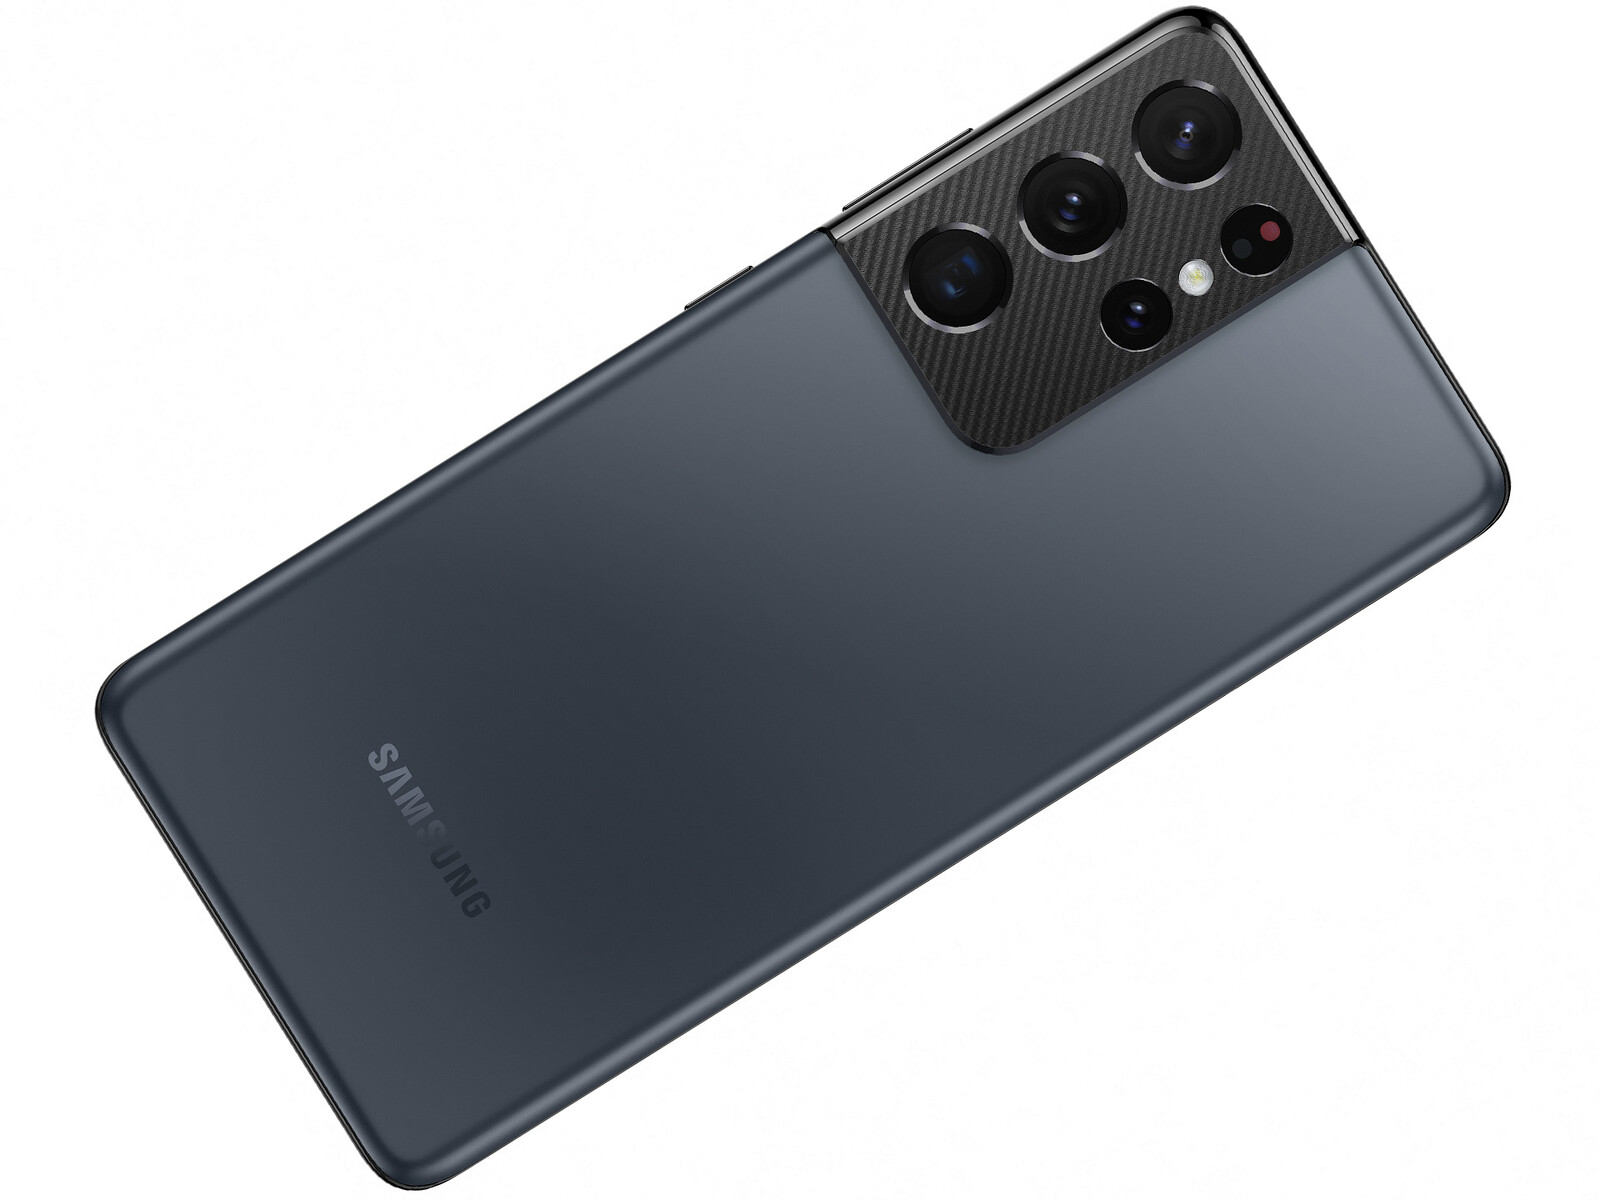 Galaxy S21 Ultra 5G review: Samsung's premier phone is pretty badass - CNET